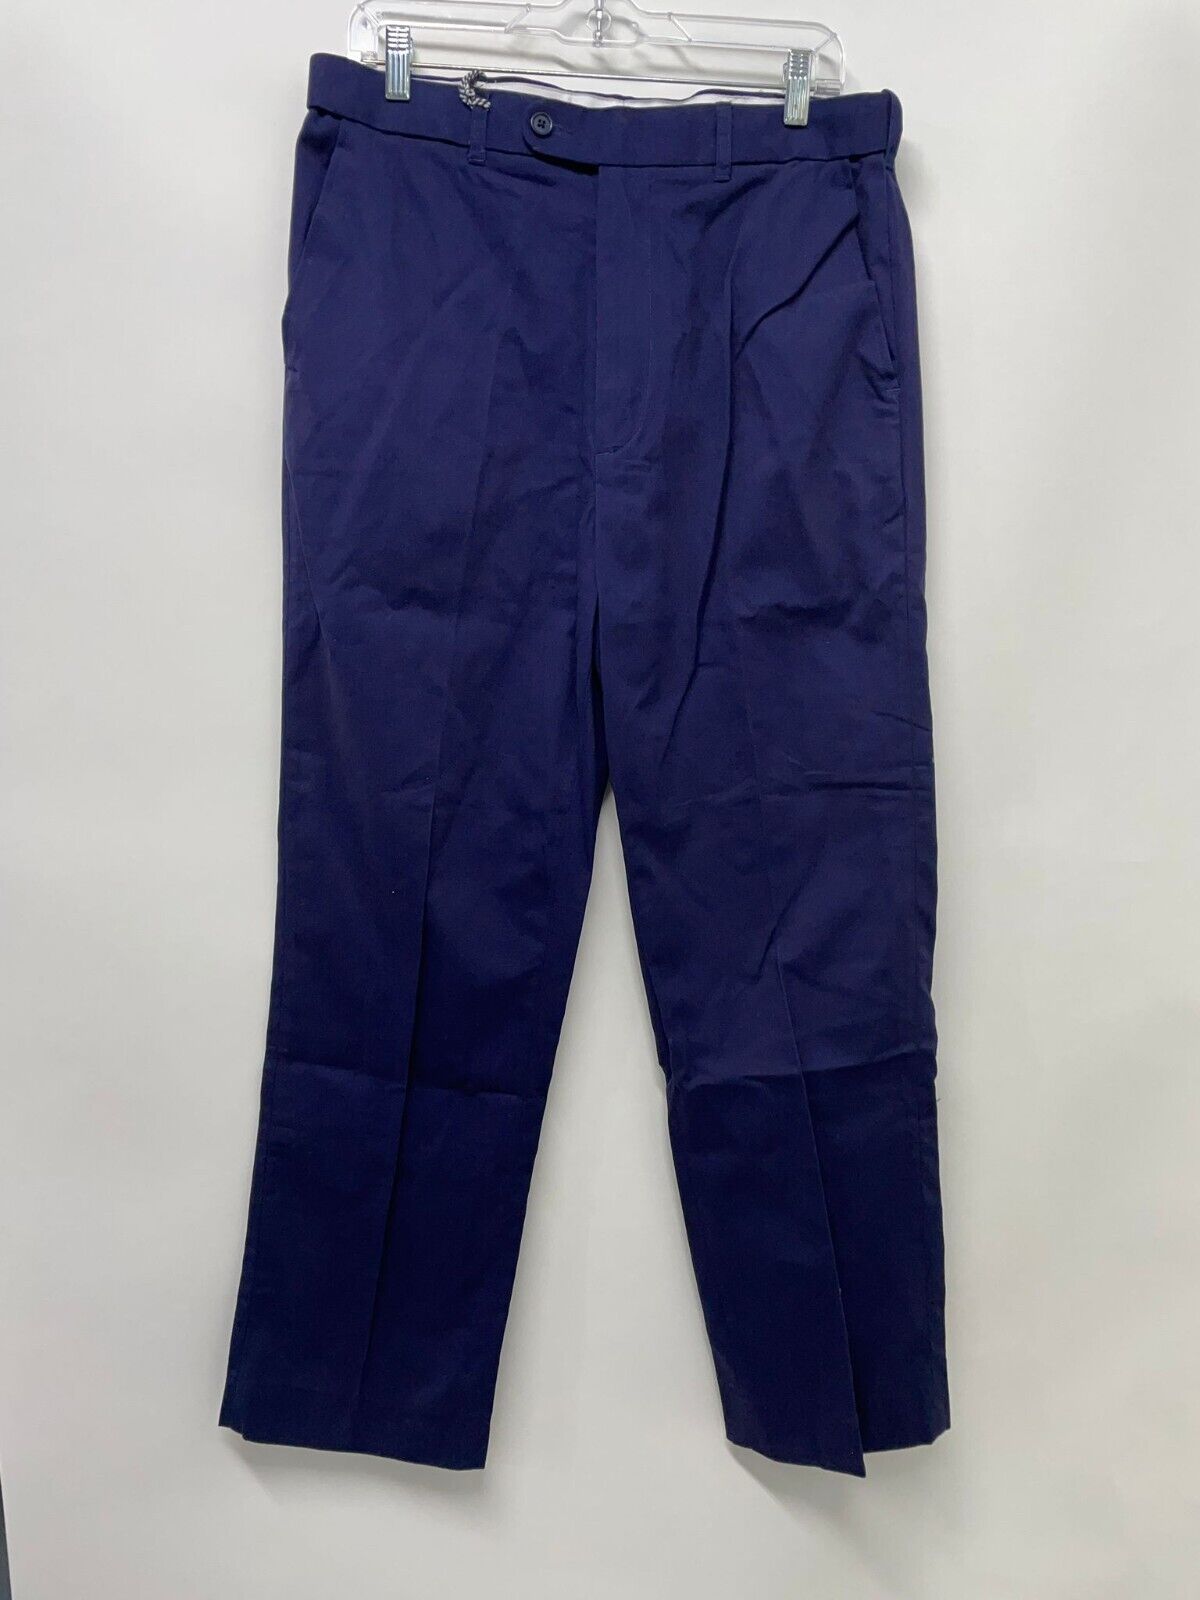 Peter Christian Mens 34x28 Flat Front Chinos Khaki Pants Navy Blue